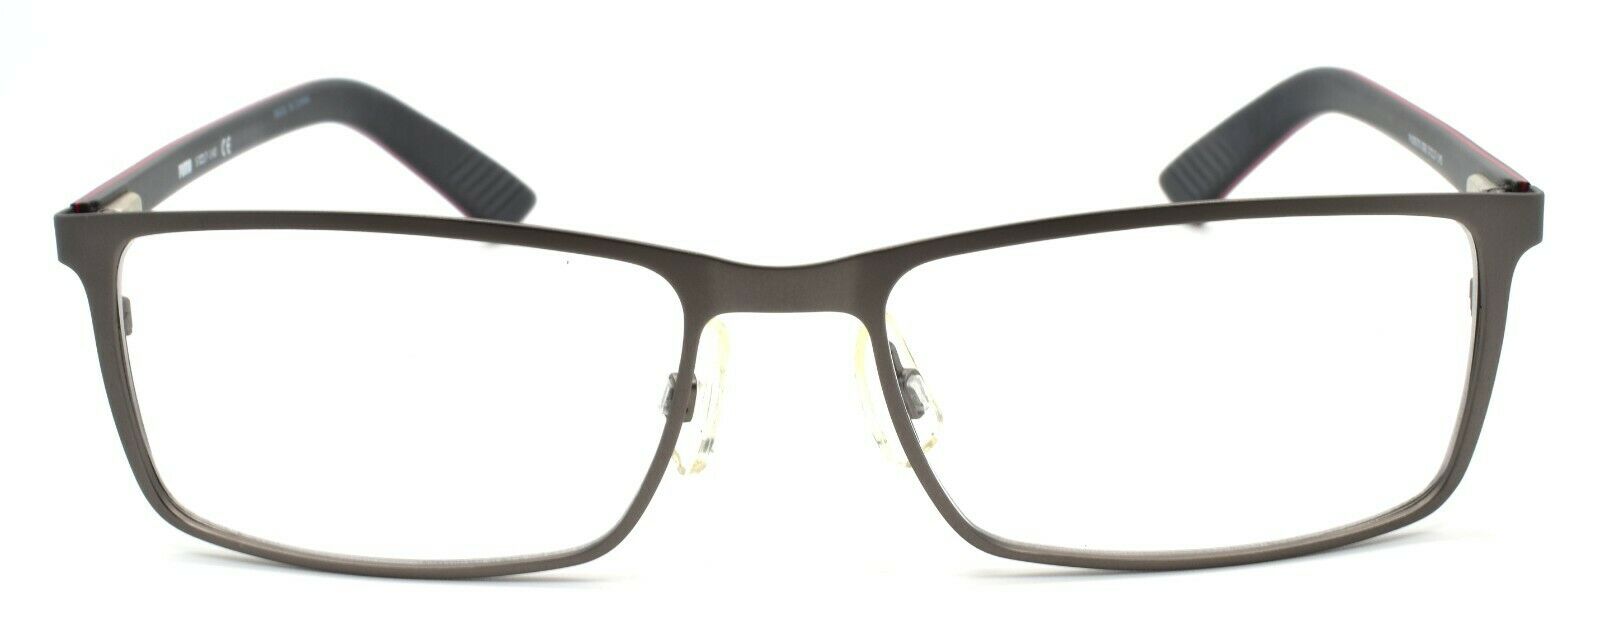 2-PUMA PU0027O 008 Men's Eyeglasses Frames 57-17-140 Ruthenium / White-889652002460-IKSpecs